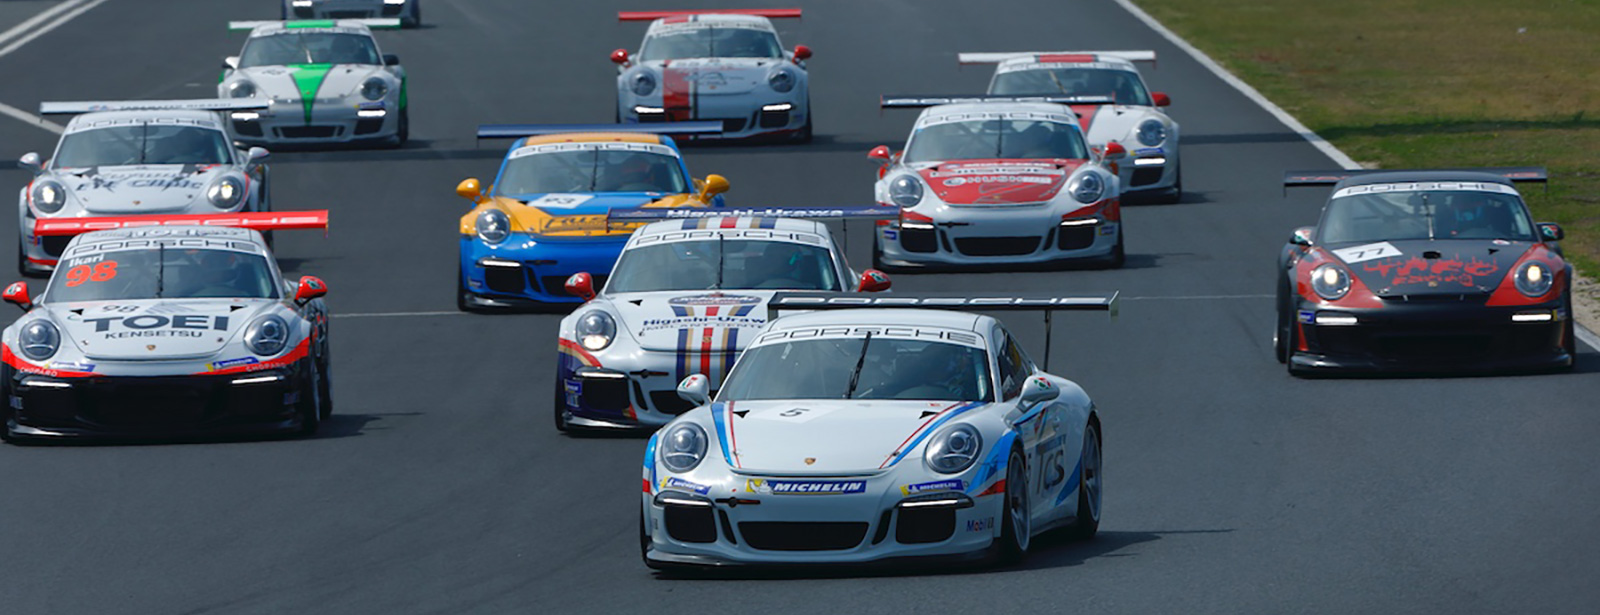 Porsche - ポルシェ スプリント チャレンジ ジャパン - ポルシェ スプリント チャレンジ ジャパン シリーズについて